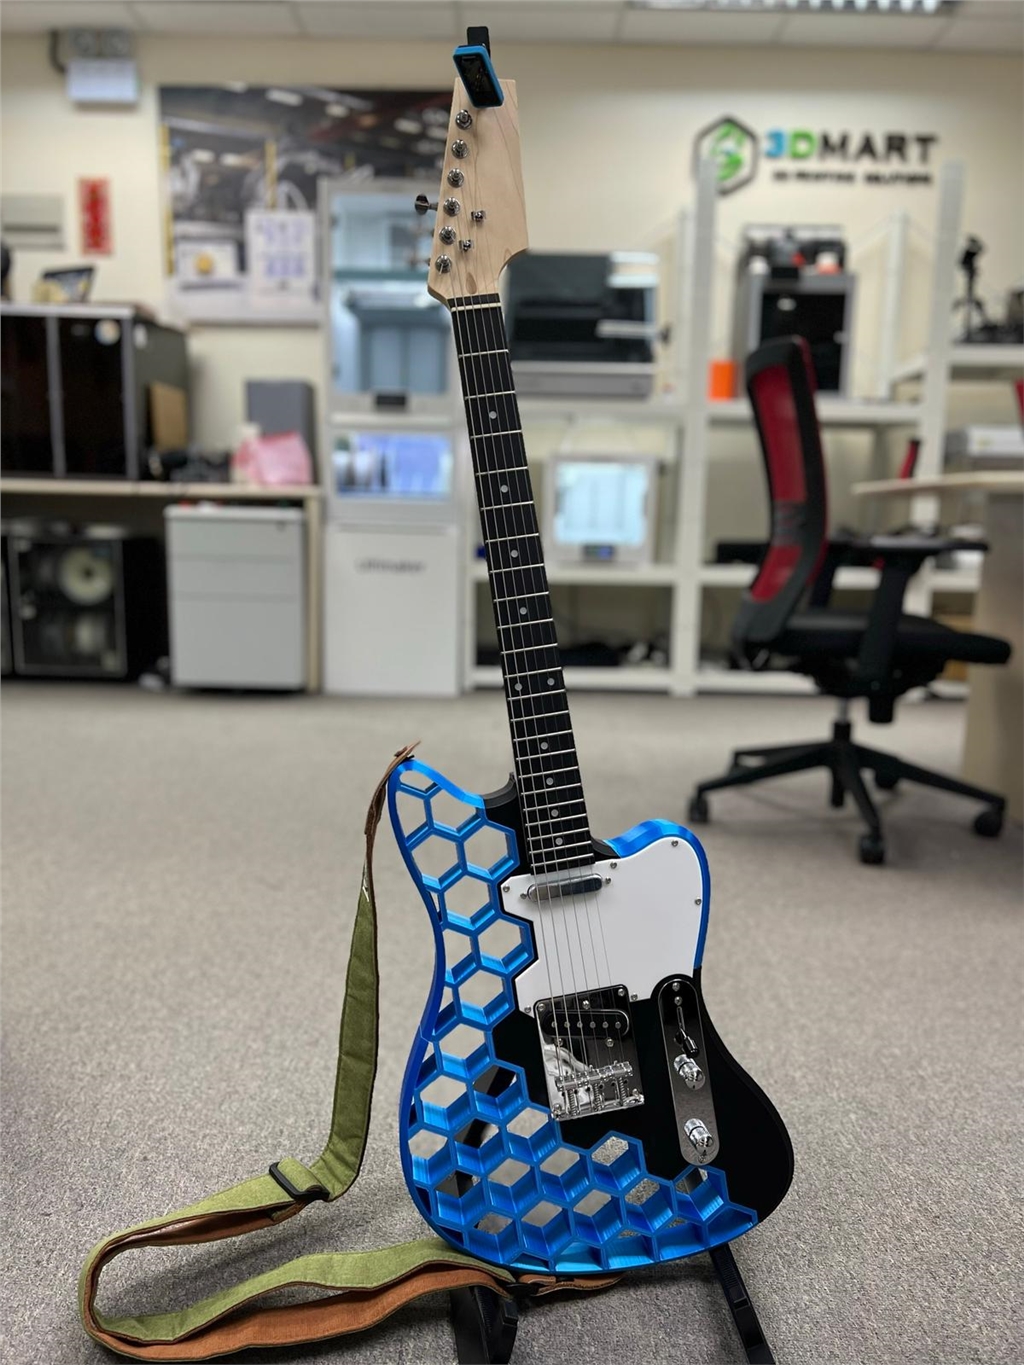 3DMart HK 電吉他製成品